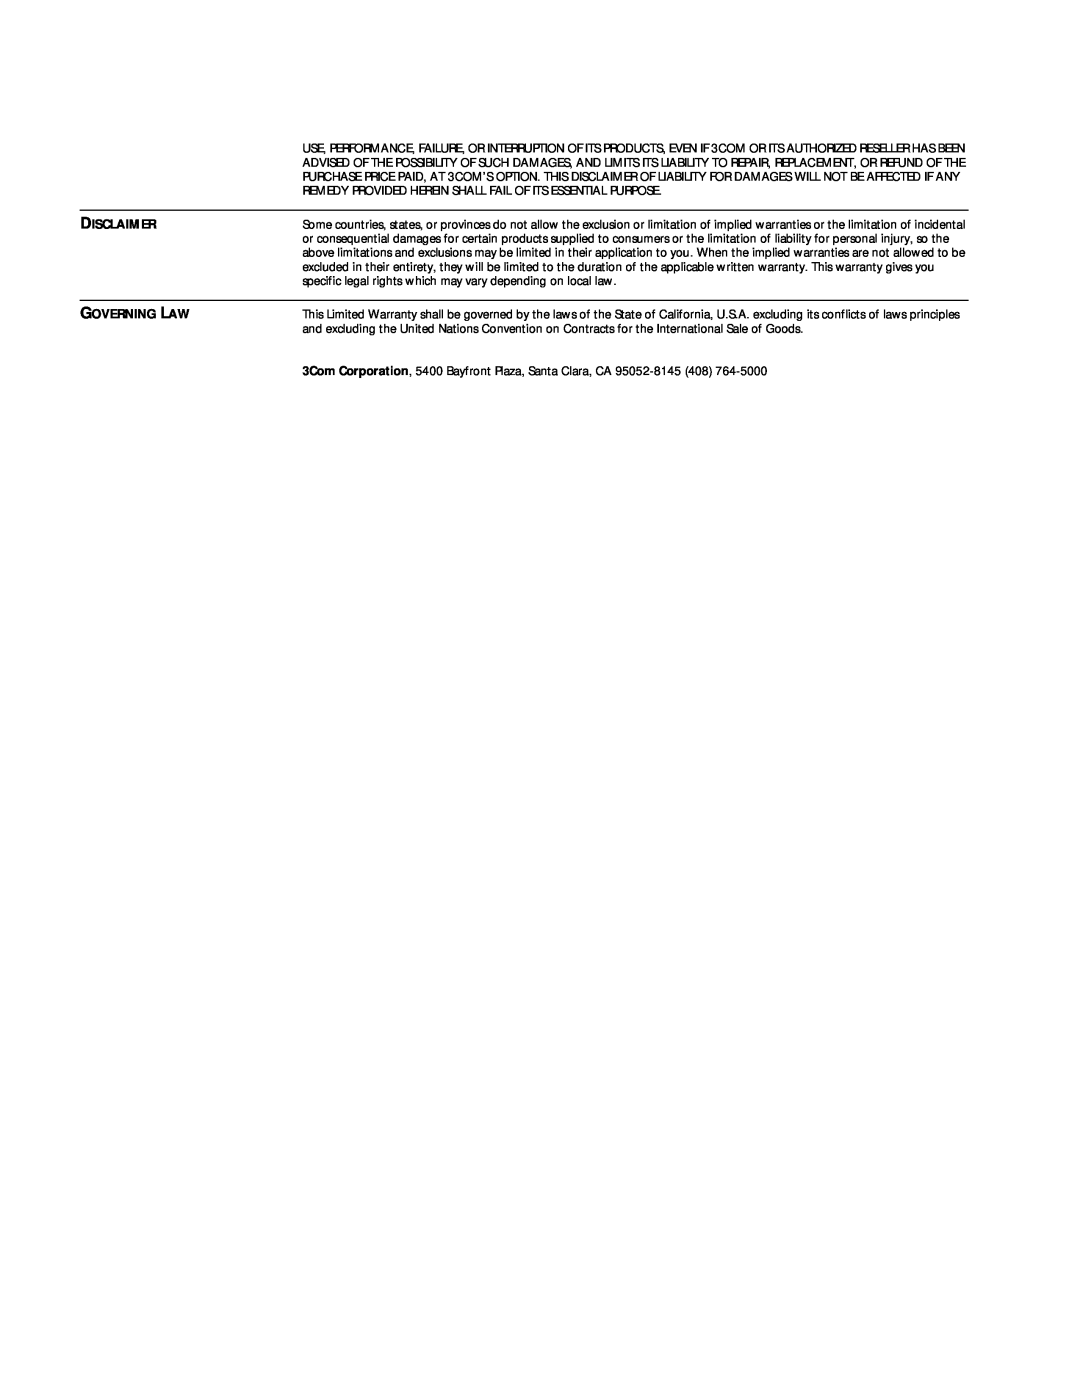 3Com ENTERPRISE OS 11.3 manual Disclaimer, Governing Law 